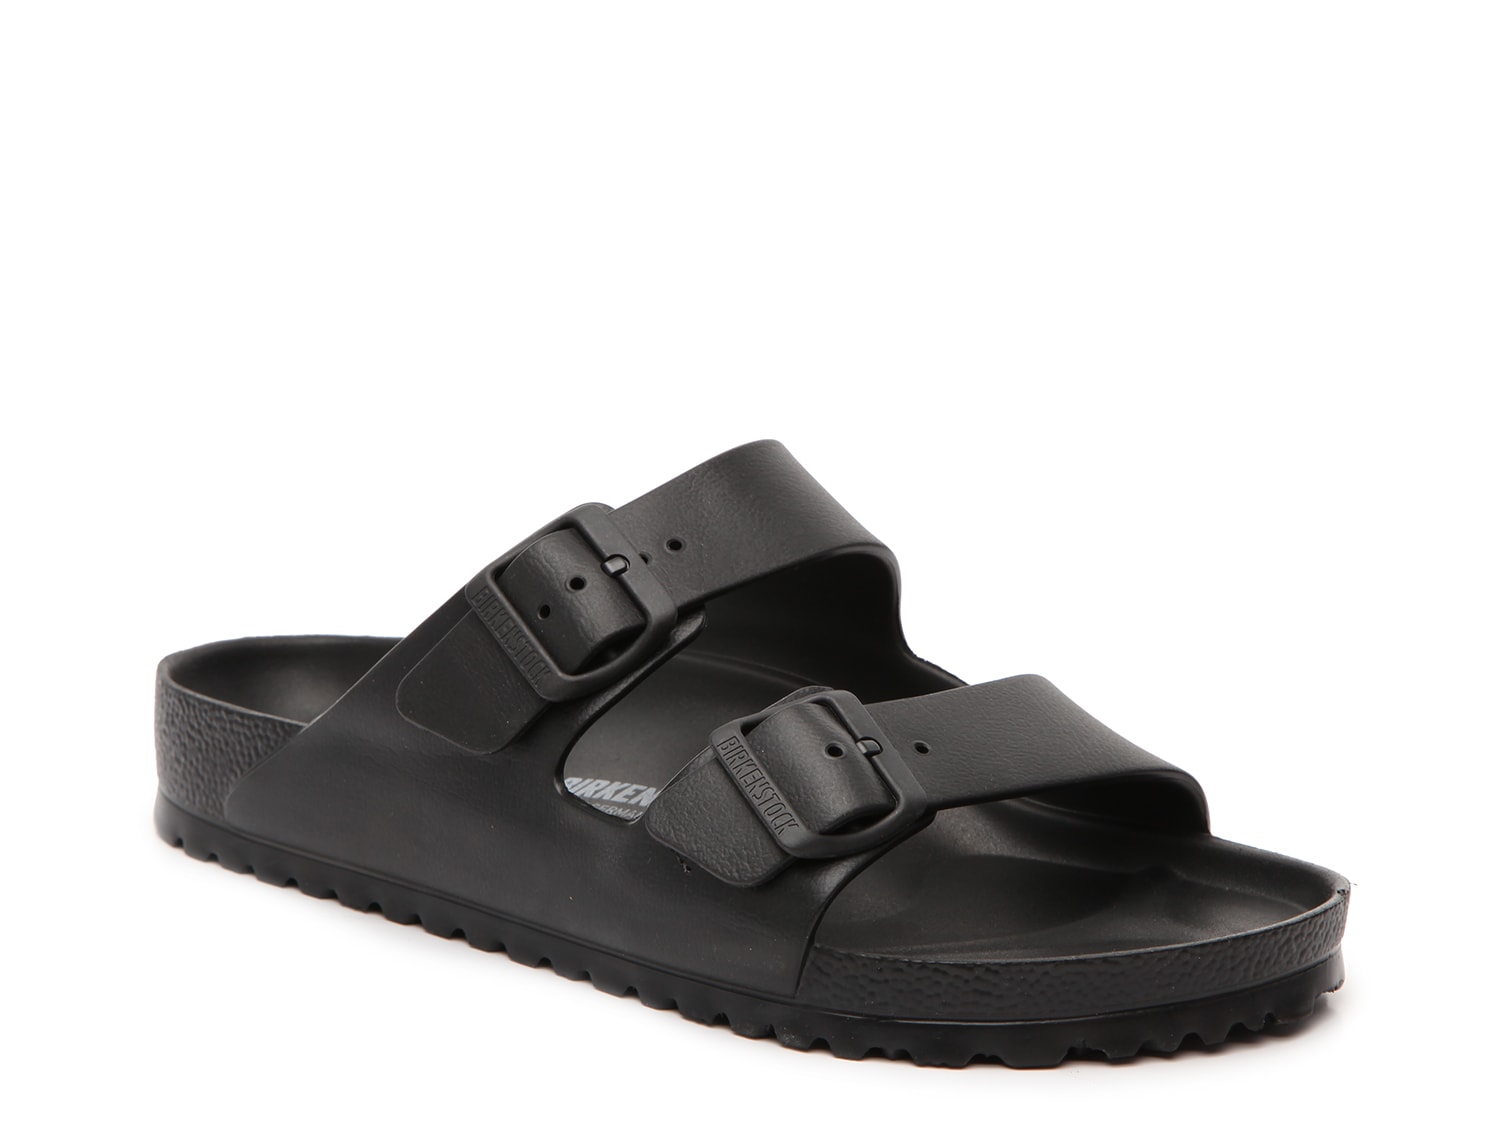 birkis sandals price